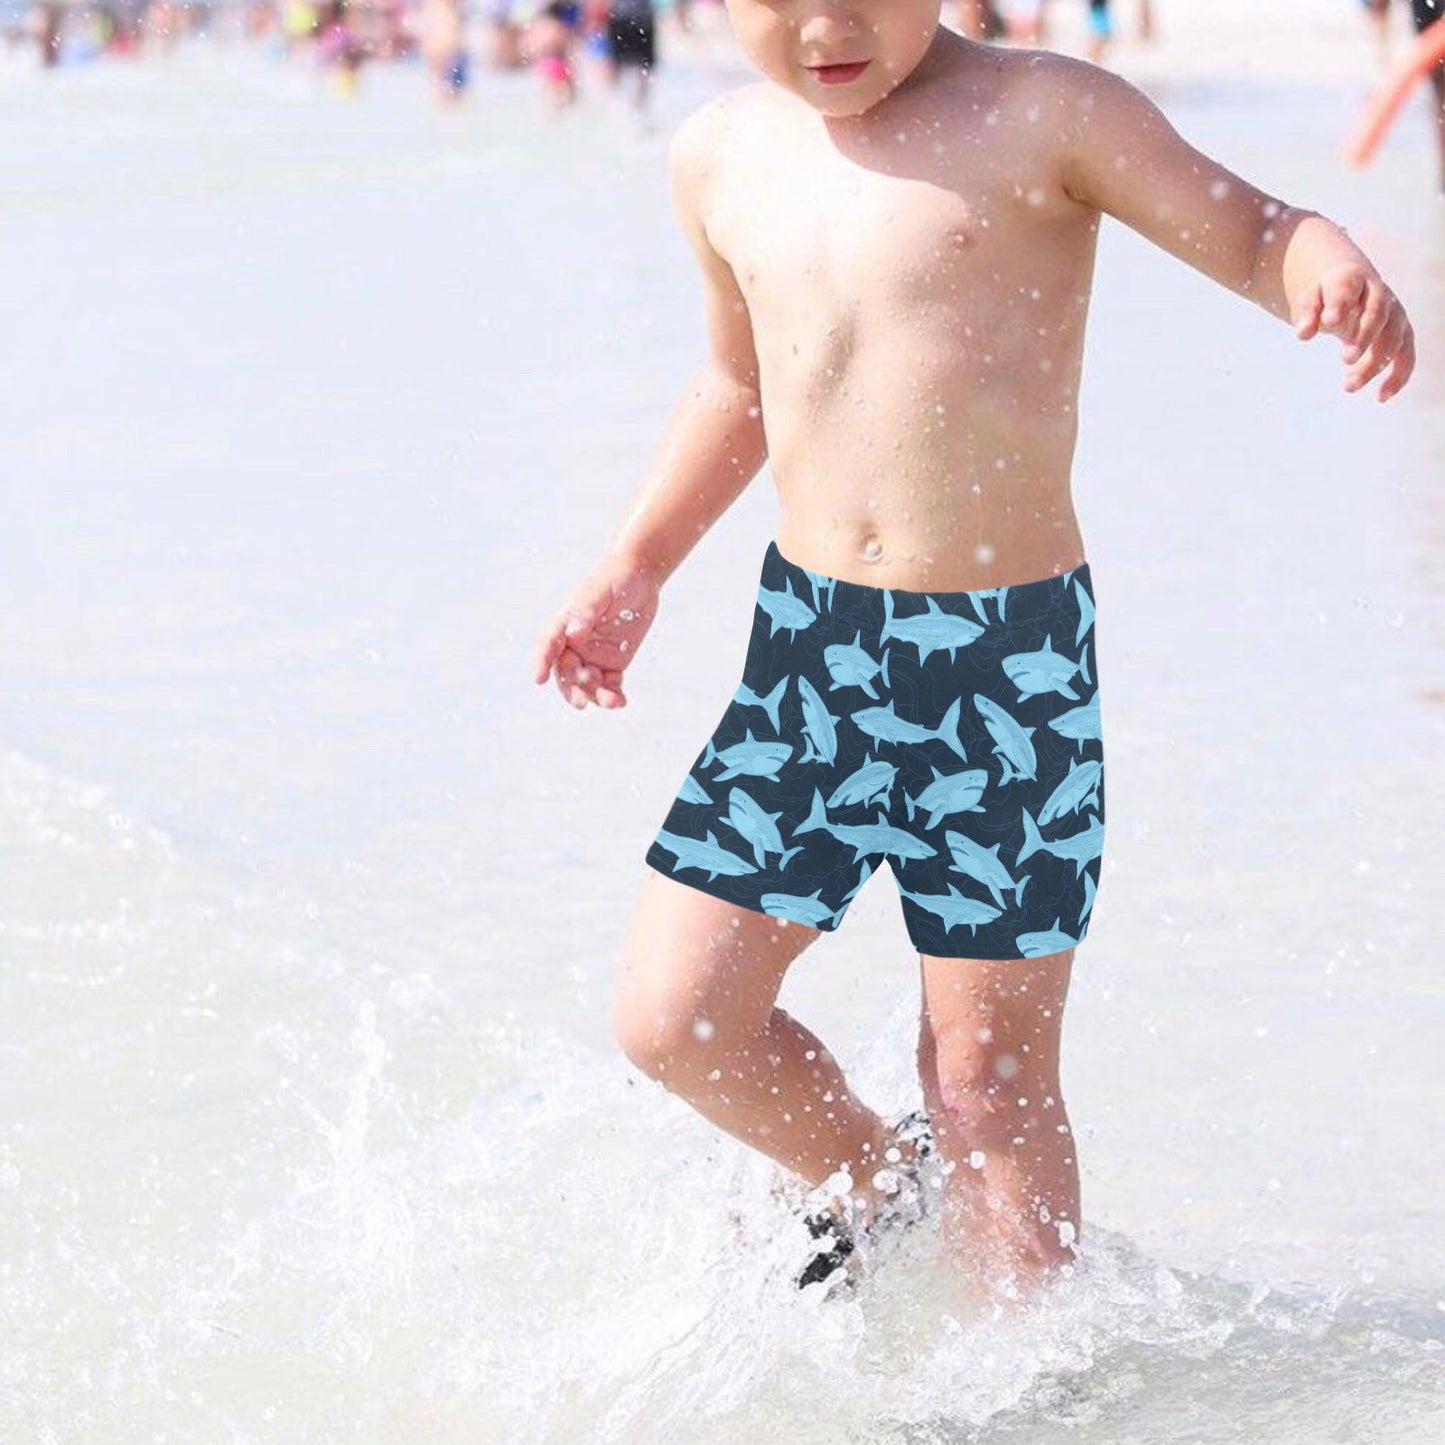 Shark Boys Swim Trunks shorts (2-7), Navy Blue Bathing Suit Toddler Beach Swim Kids with Inner Lining Drawstring Casual Shorts Swimsuit Starcove Fashion